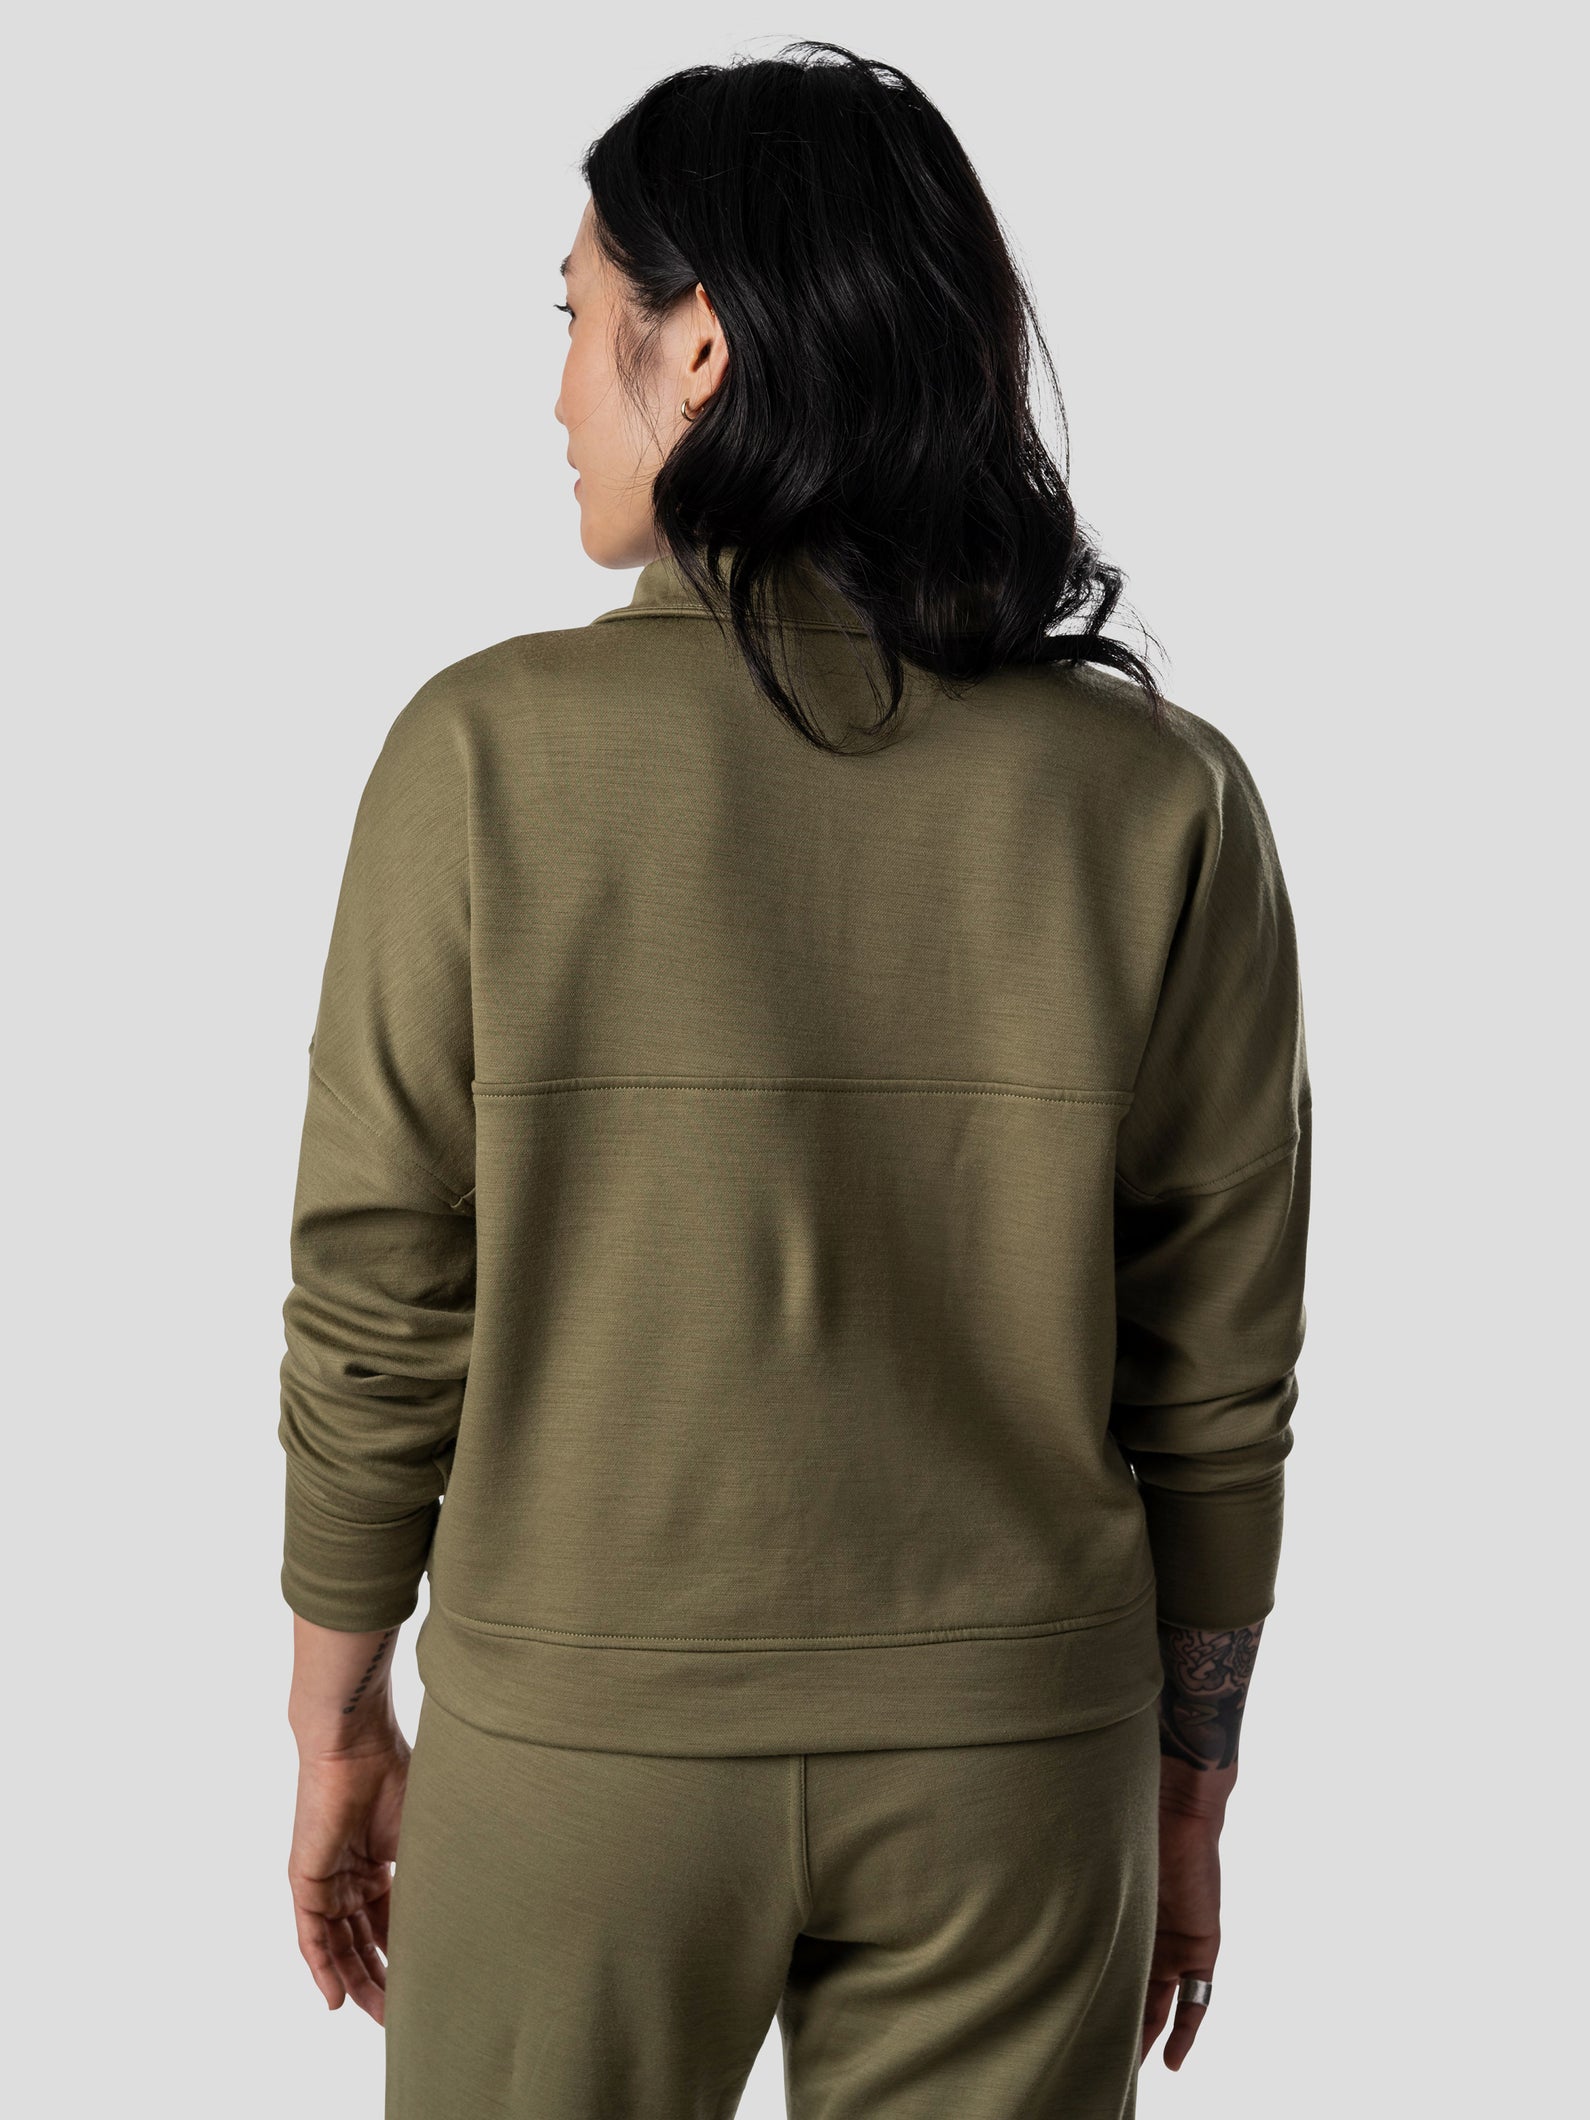 Women's Barton Fleece Quarter Zip - Military Green